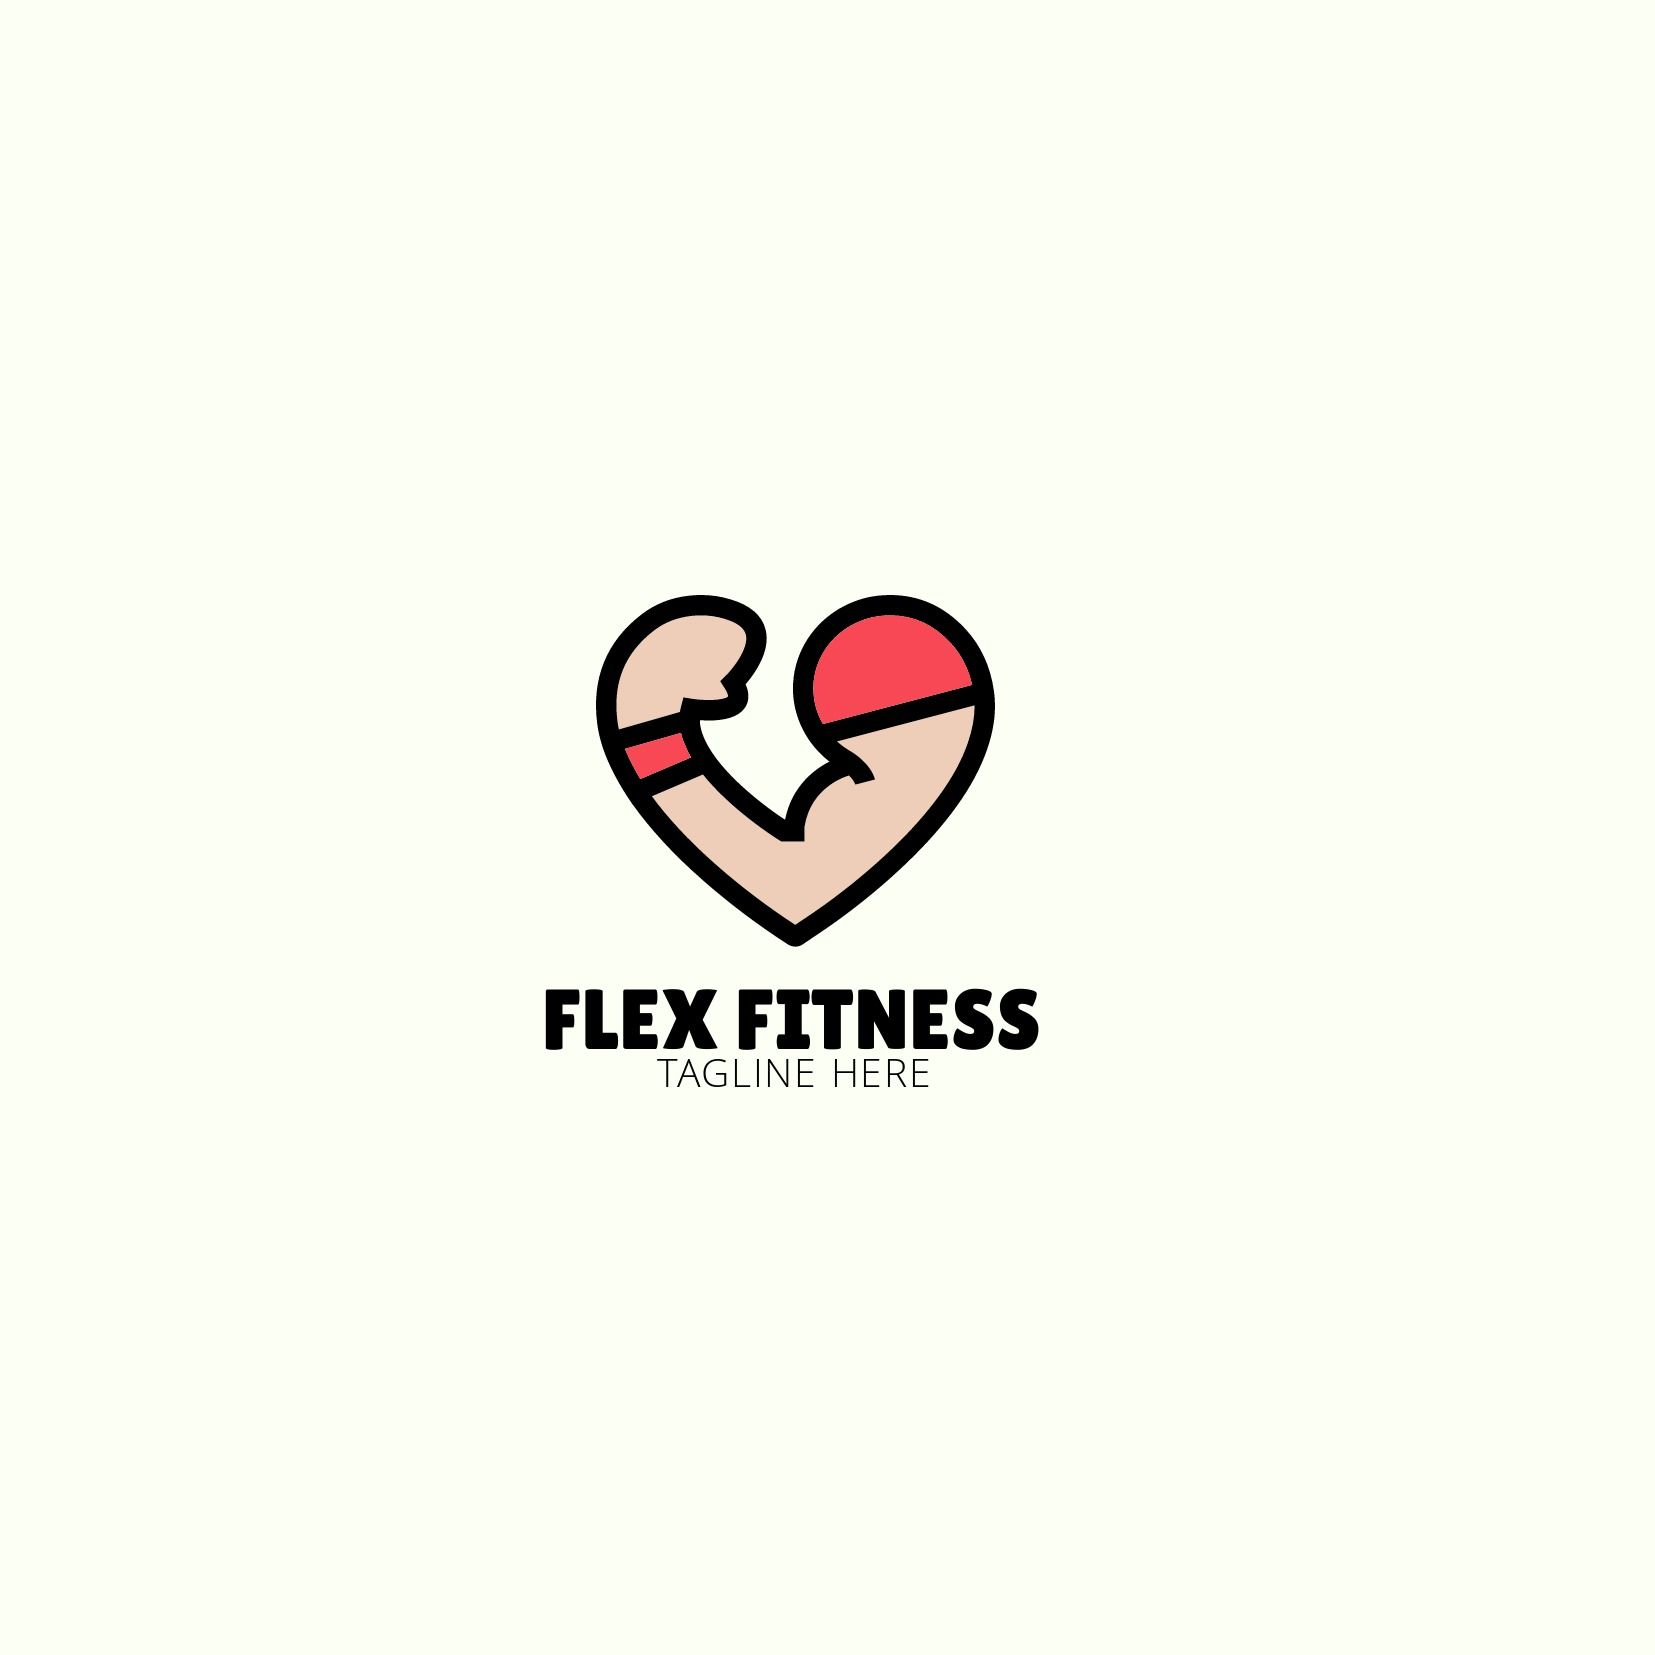 Flex Fitness Logo - A step-by-step guide to creative logo design - Image